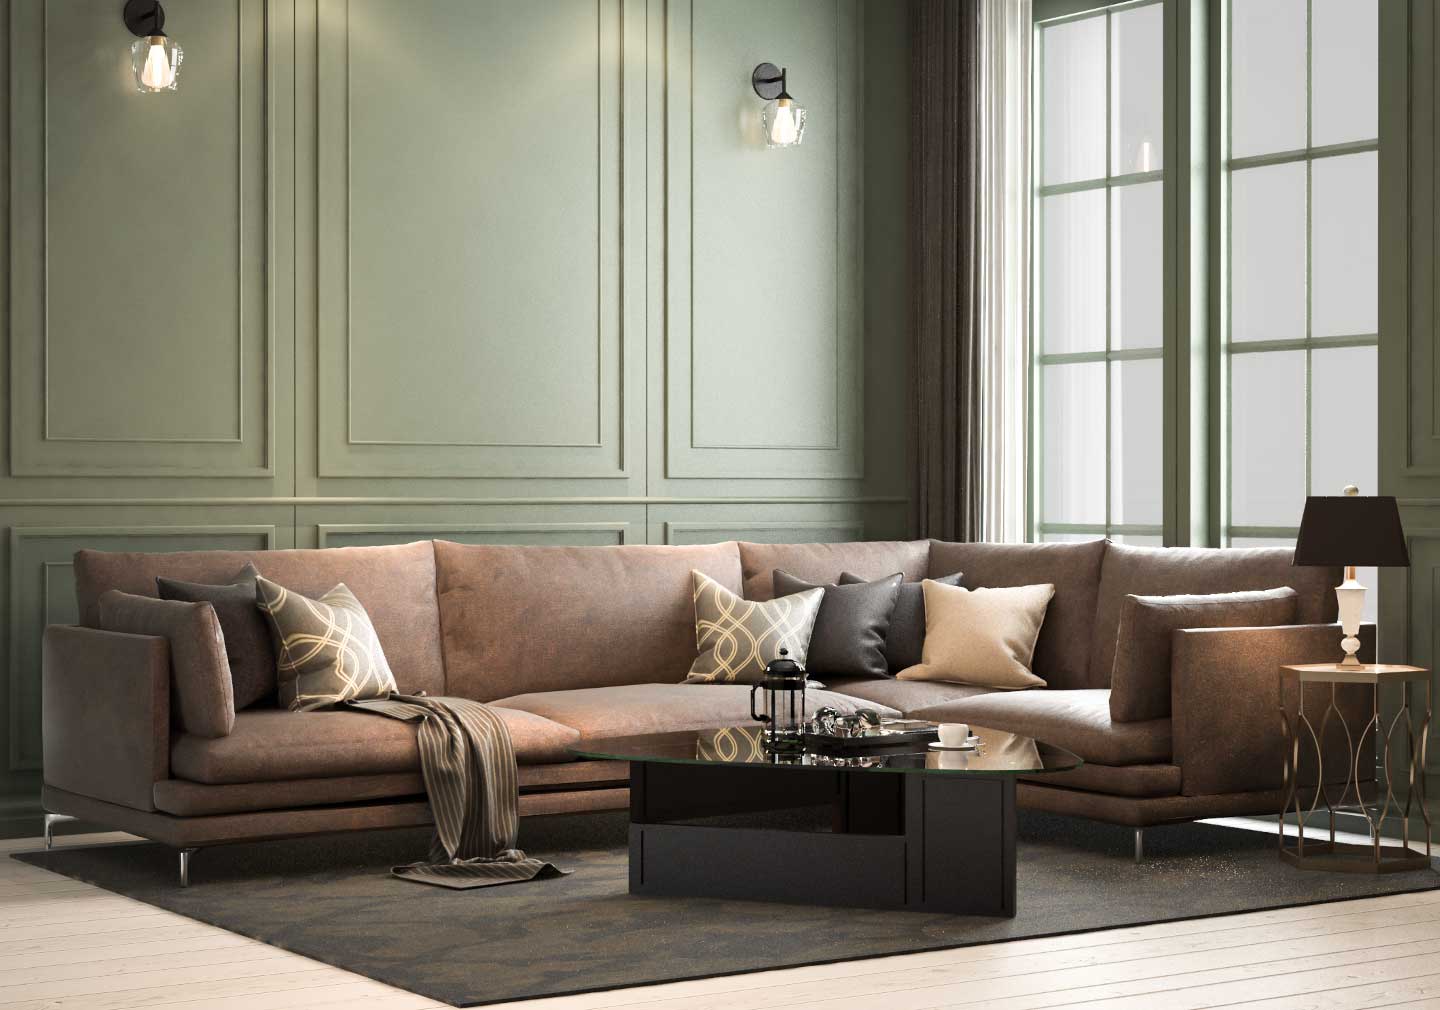 modern interior design - living room